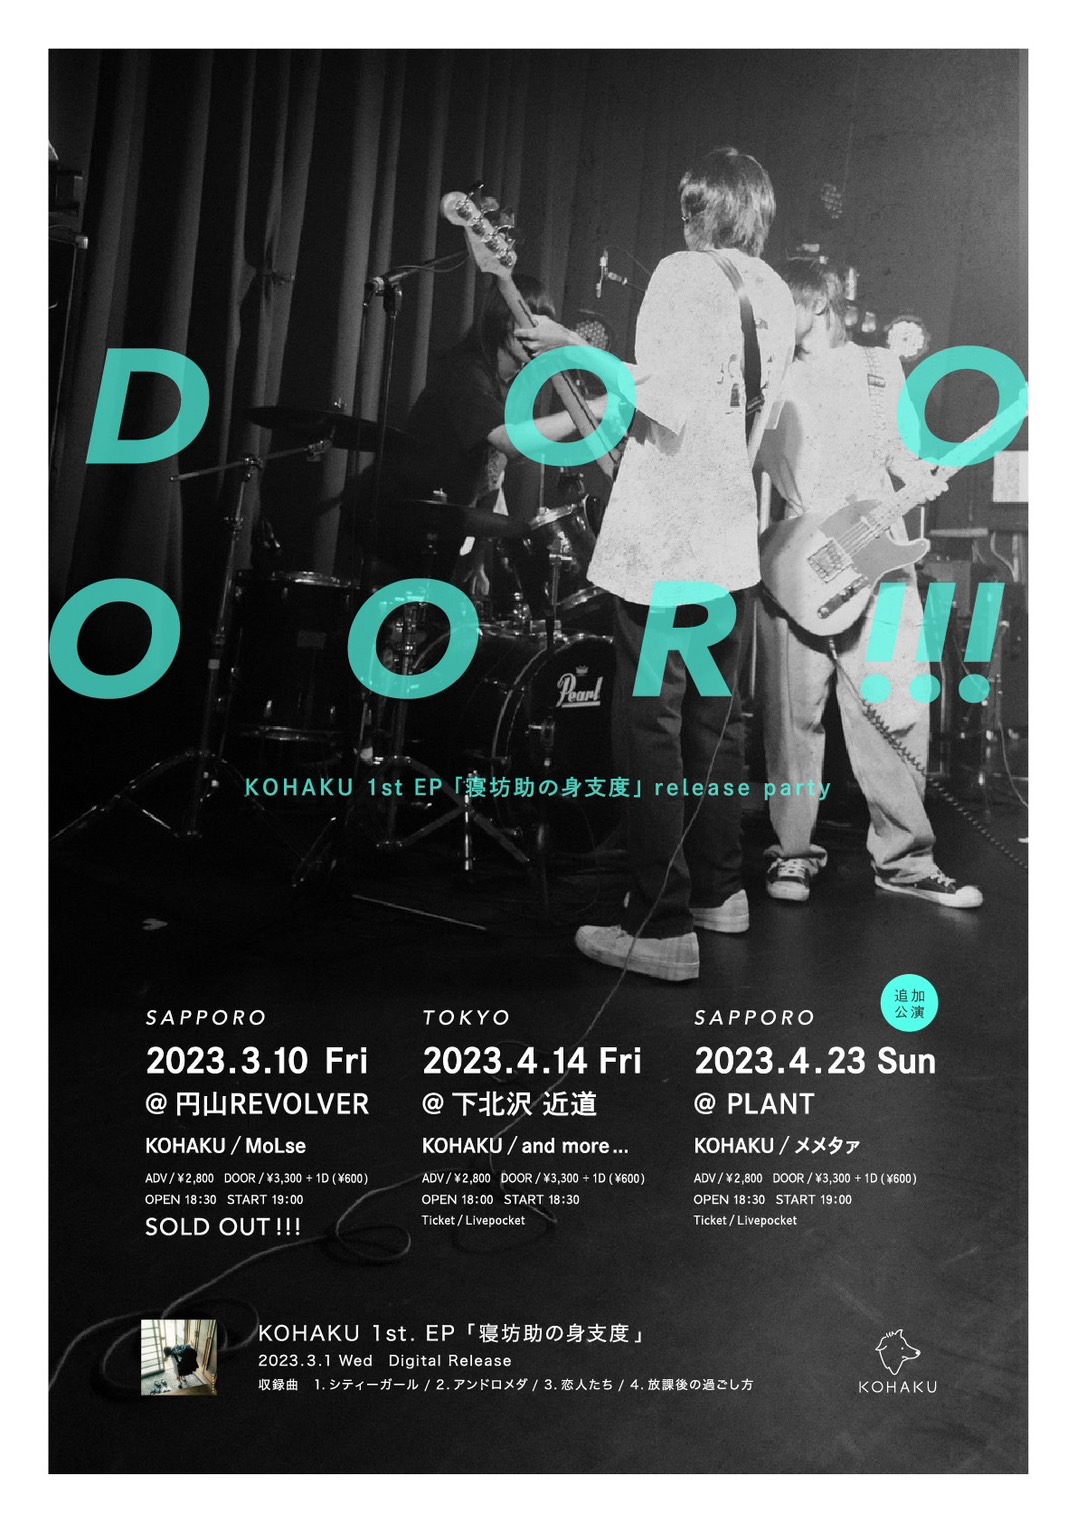 KOHAKU presents 「寝坊助の身支度」Release party 『DOOOOR!!』札幌追加公演